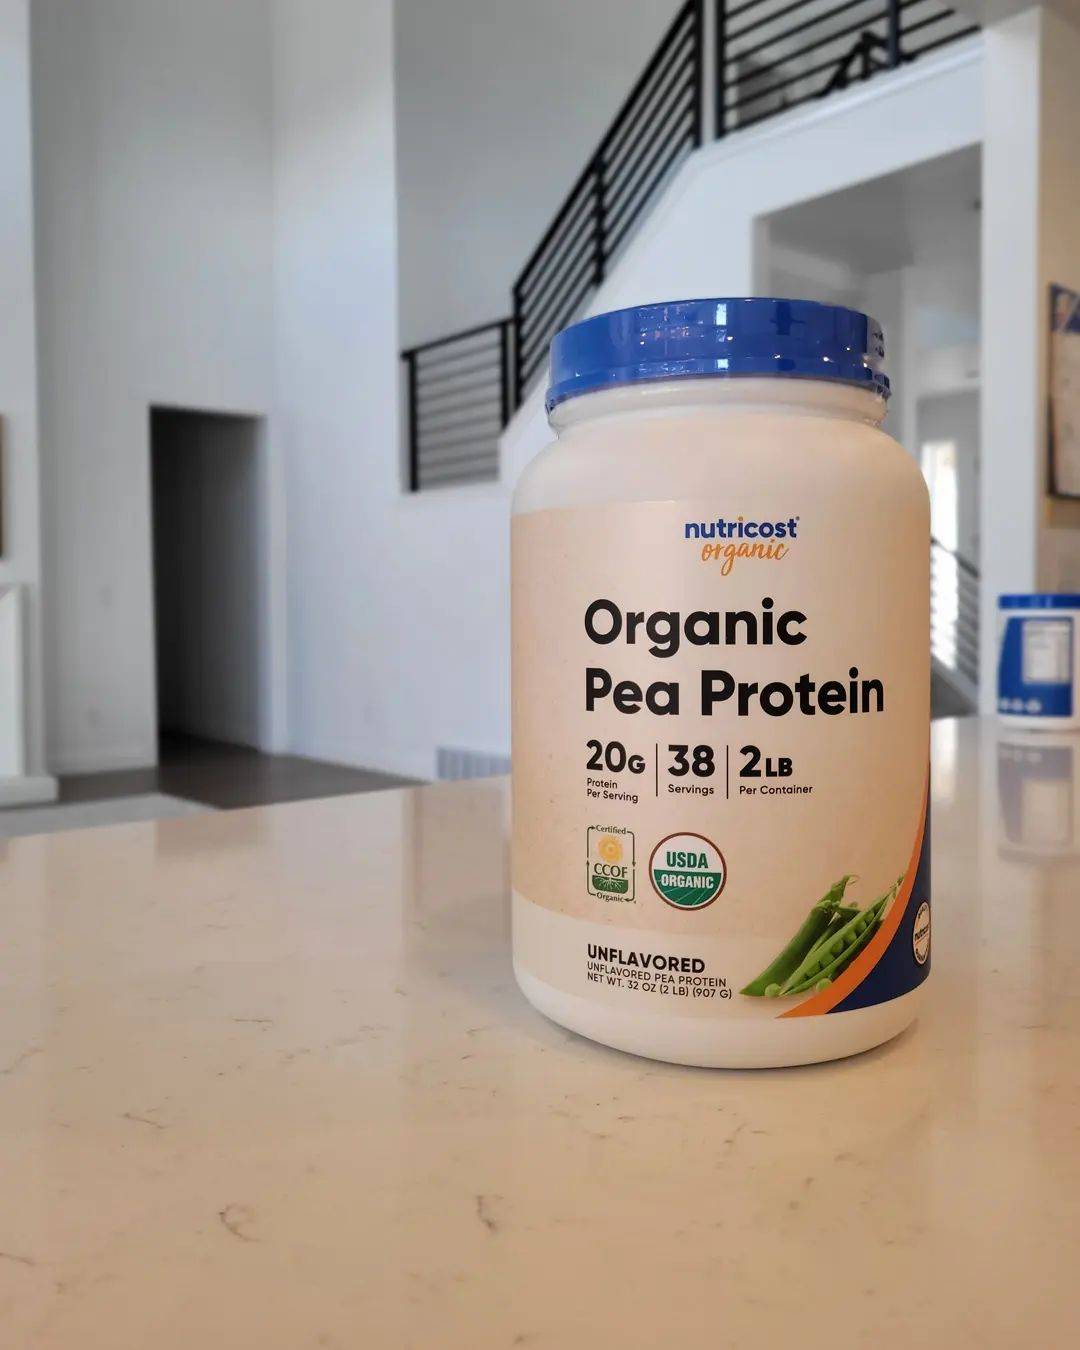 Nutricost Organic Pea Protein instagram